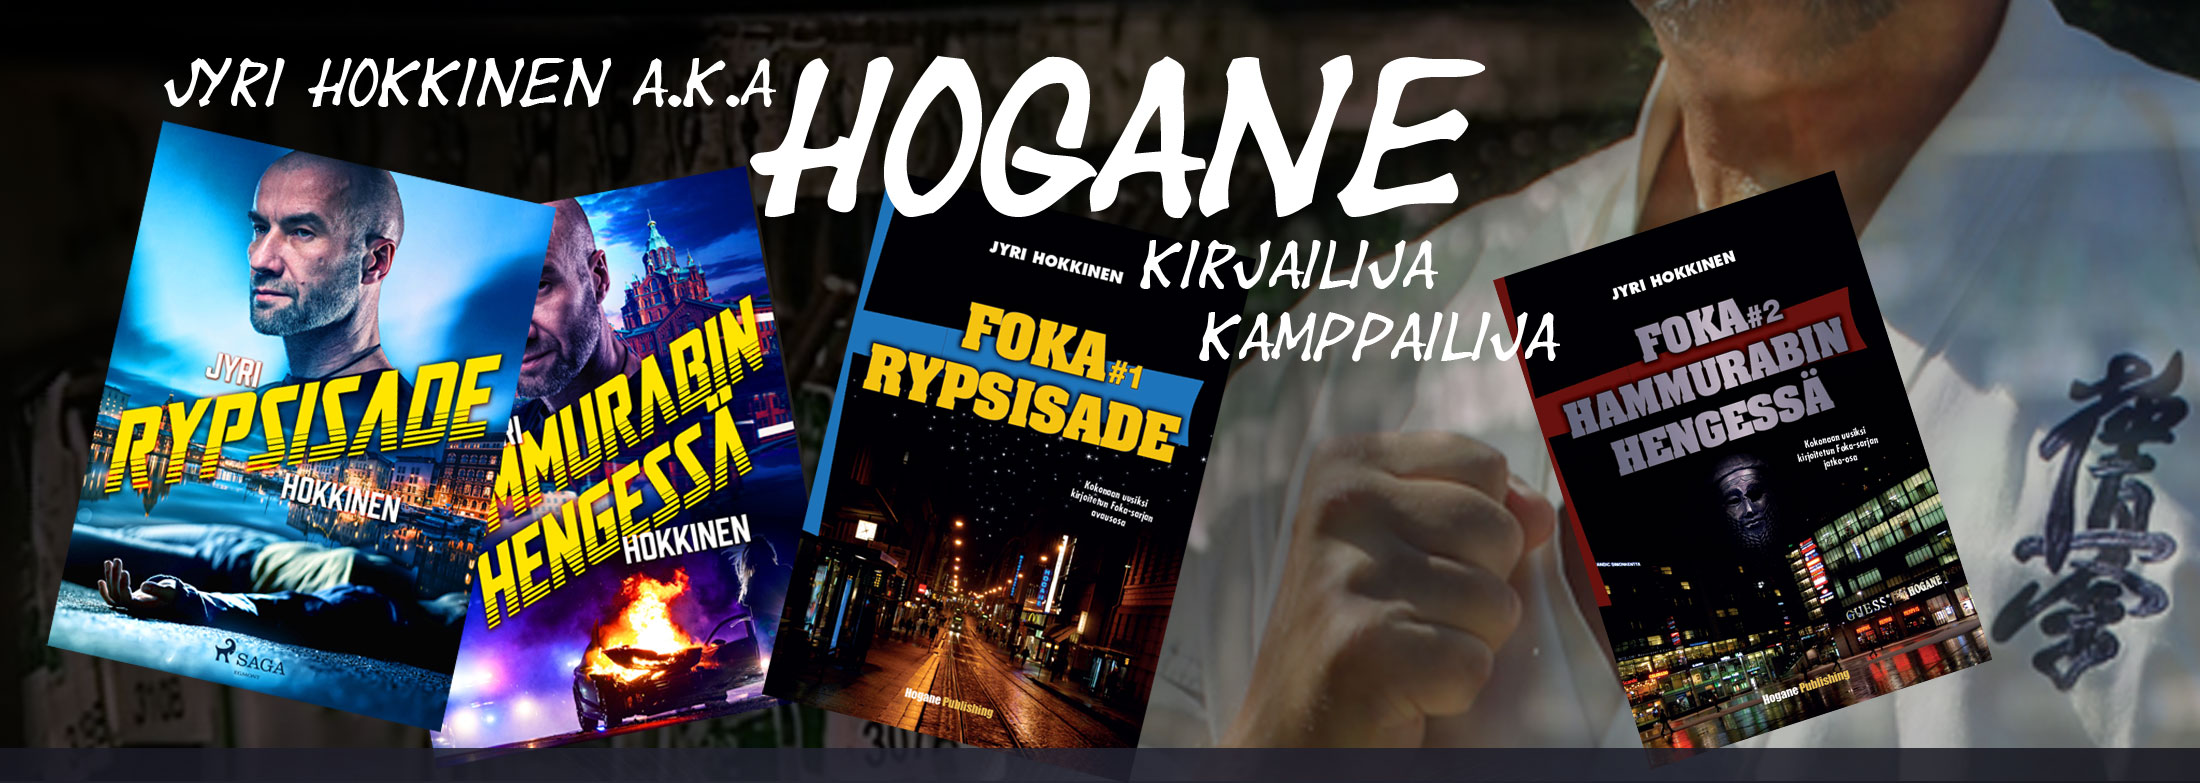 Jyri Hokkinen a.k.a Hogane – kirjailija ja kamppailija